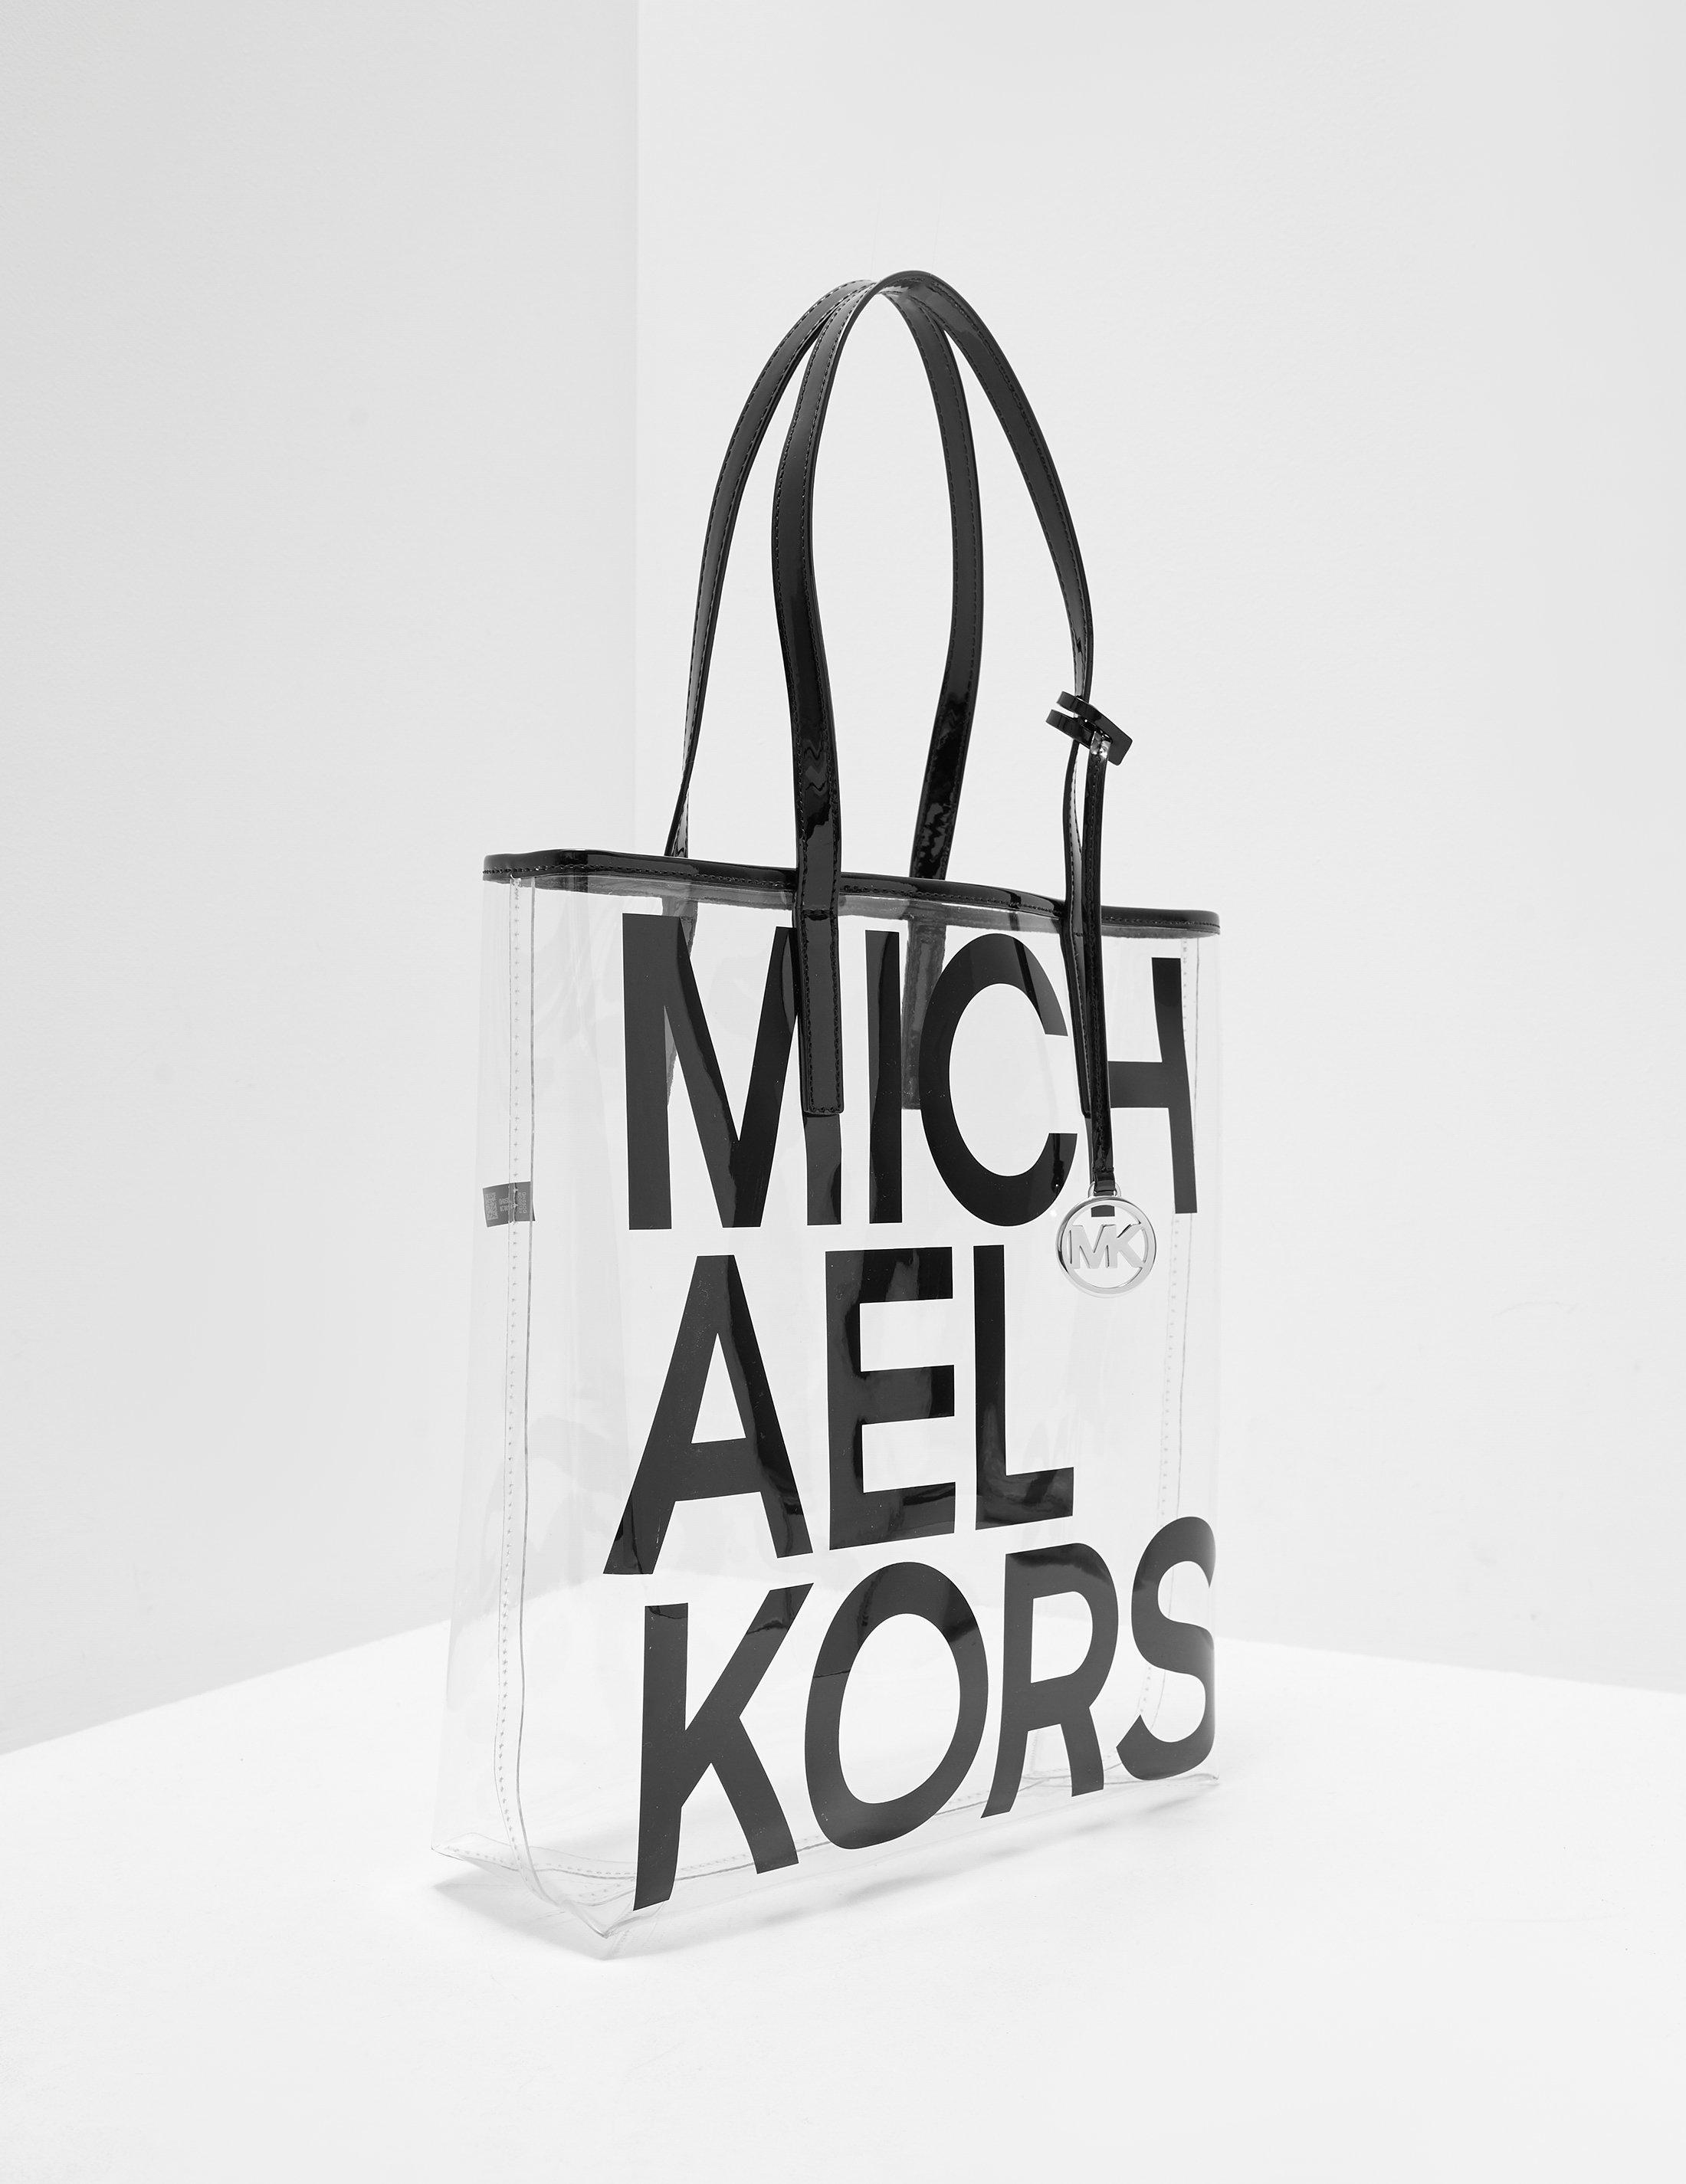 Michael Kors Clear Tote Bag Black in Black - Lyst